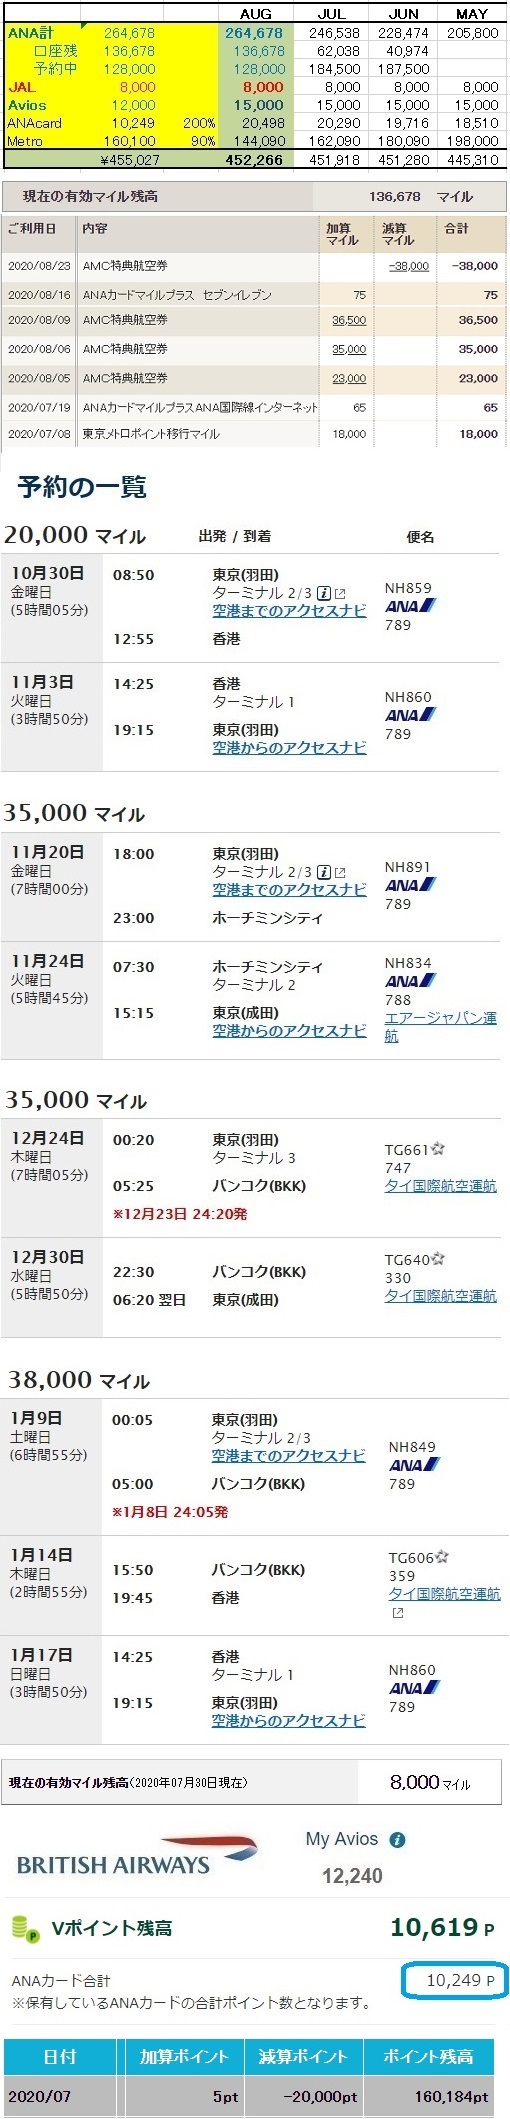 【ANAマイル】 累計獲得852,178M→587,500M搭乗